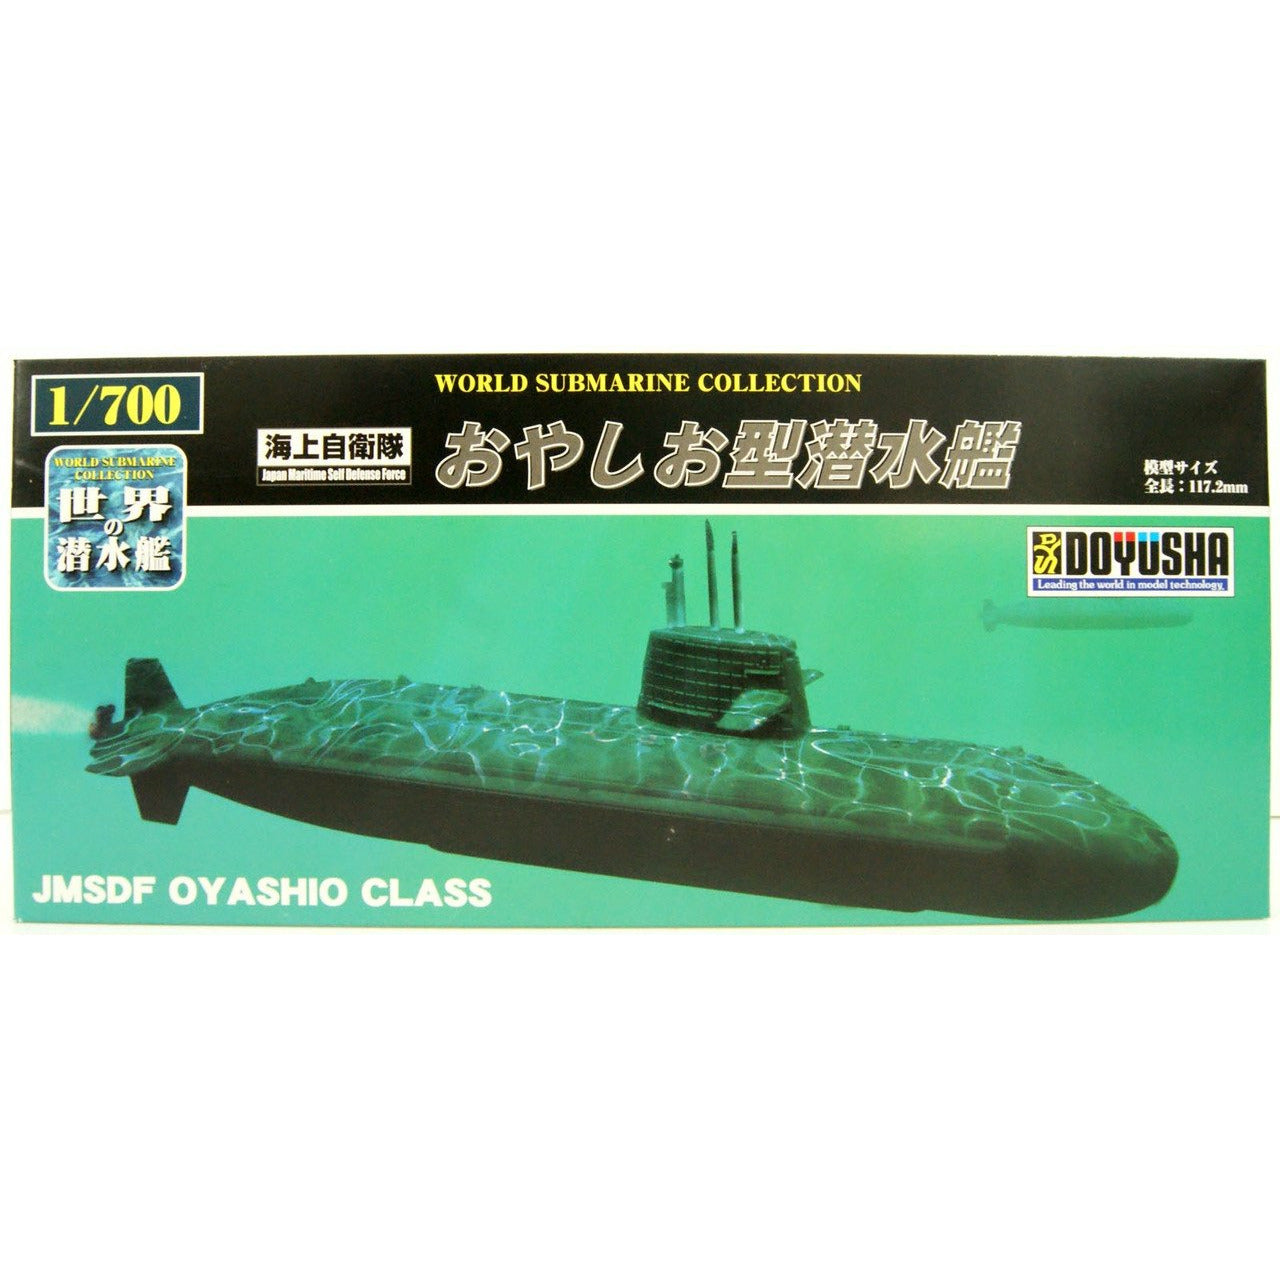 JMSDF Oyashio Class Submarine 1/700 Model Ship Kit #1200-1 by Doyusha